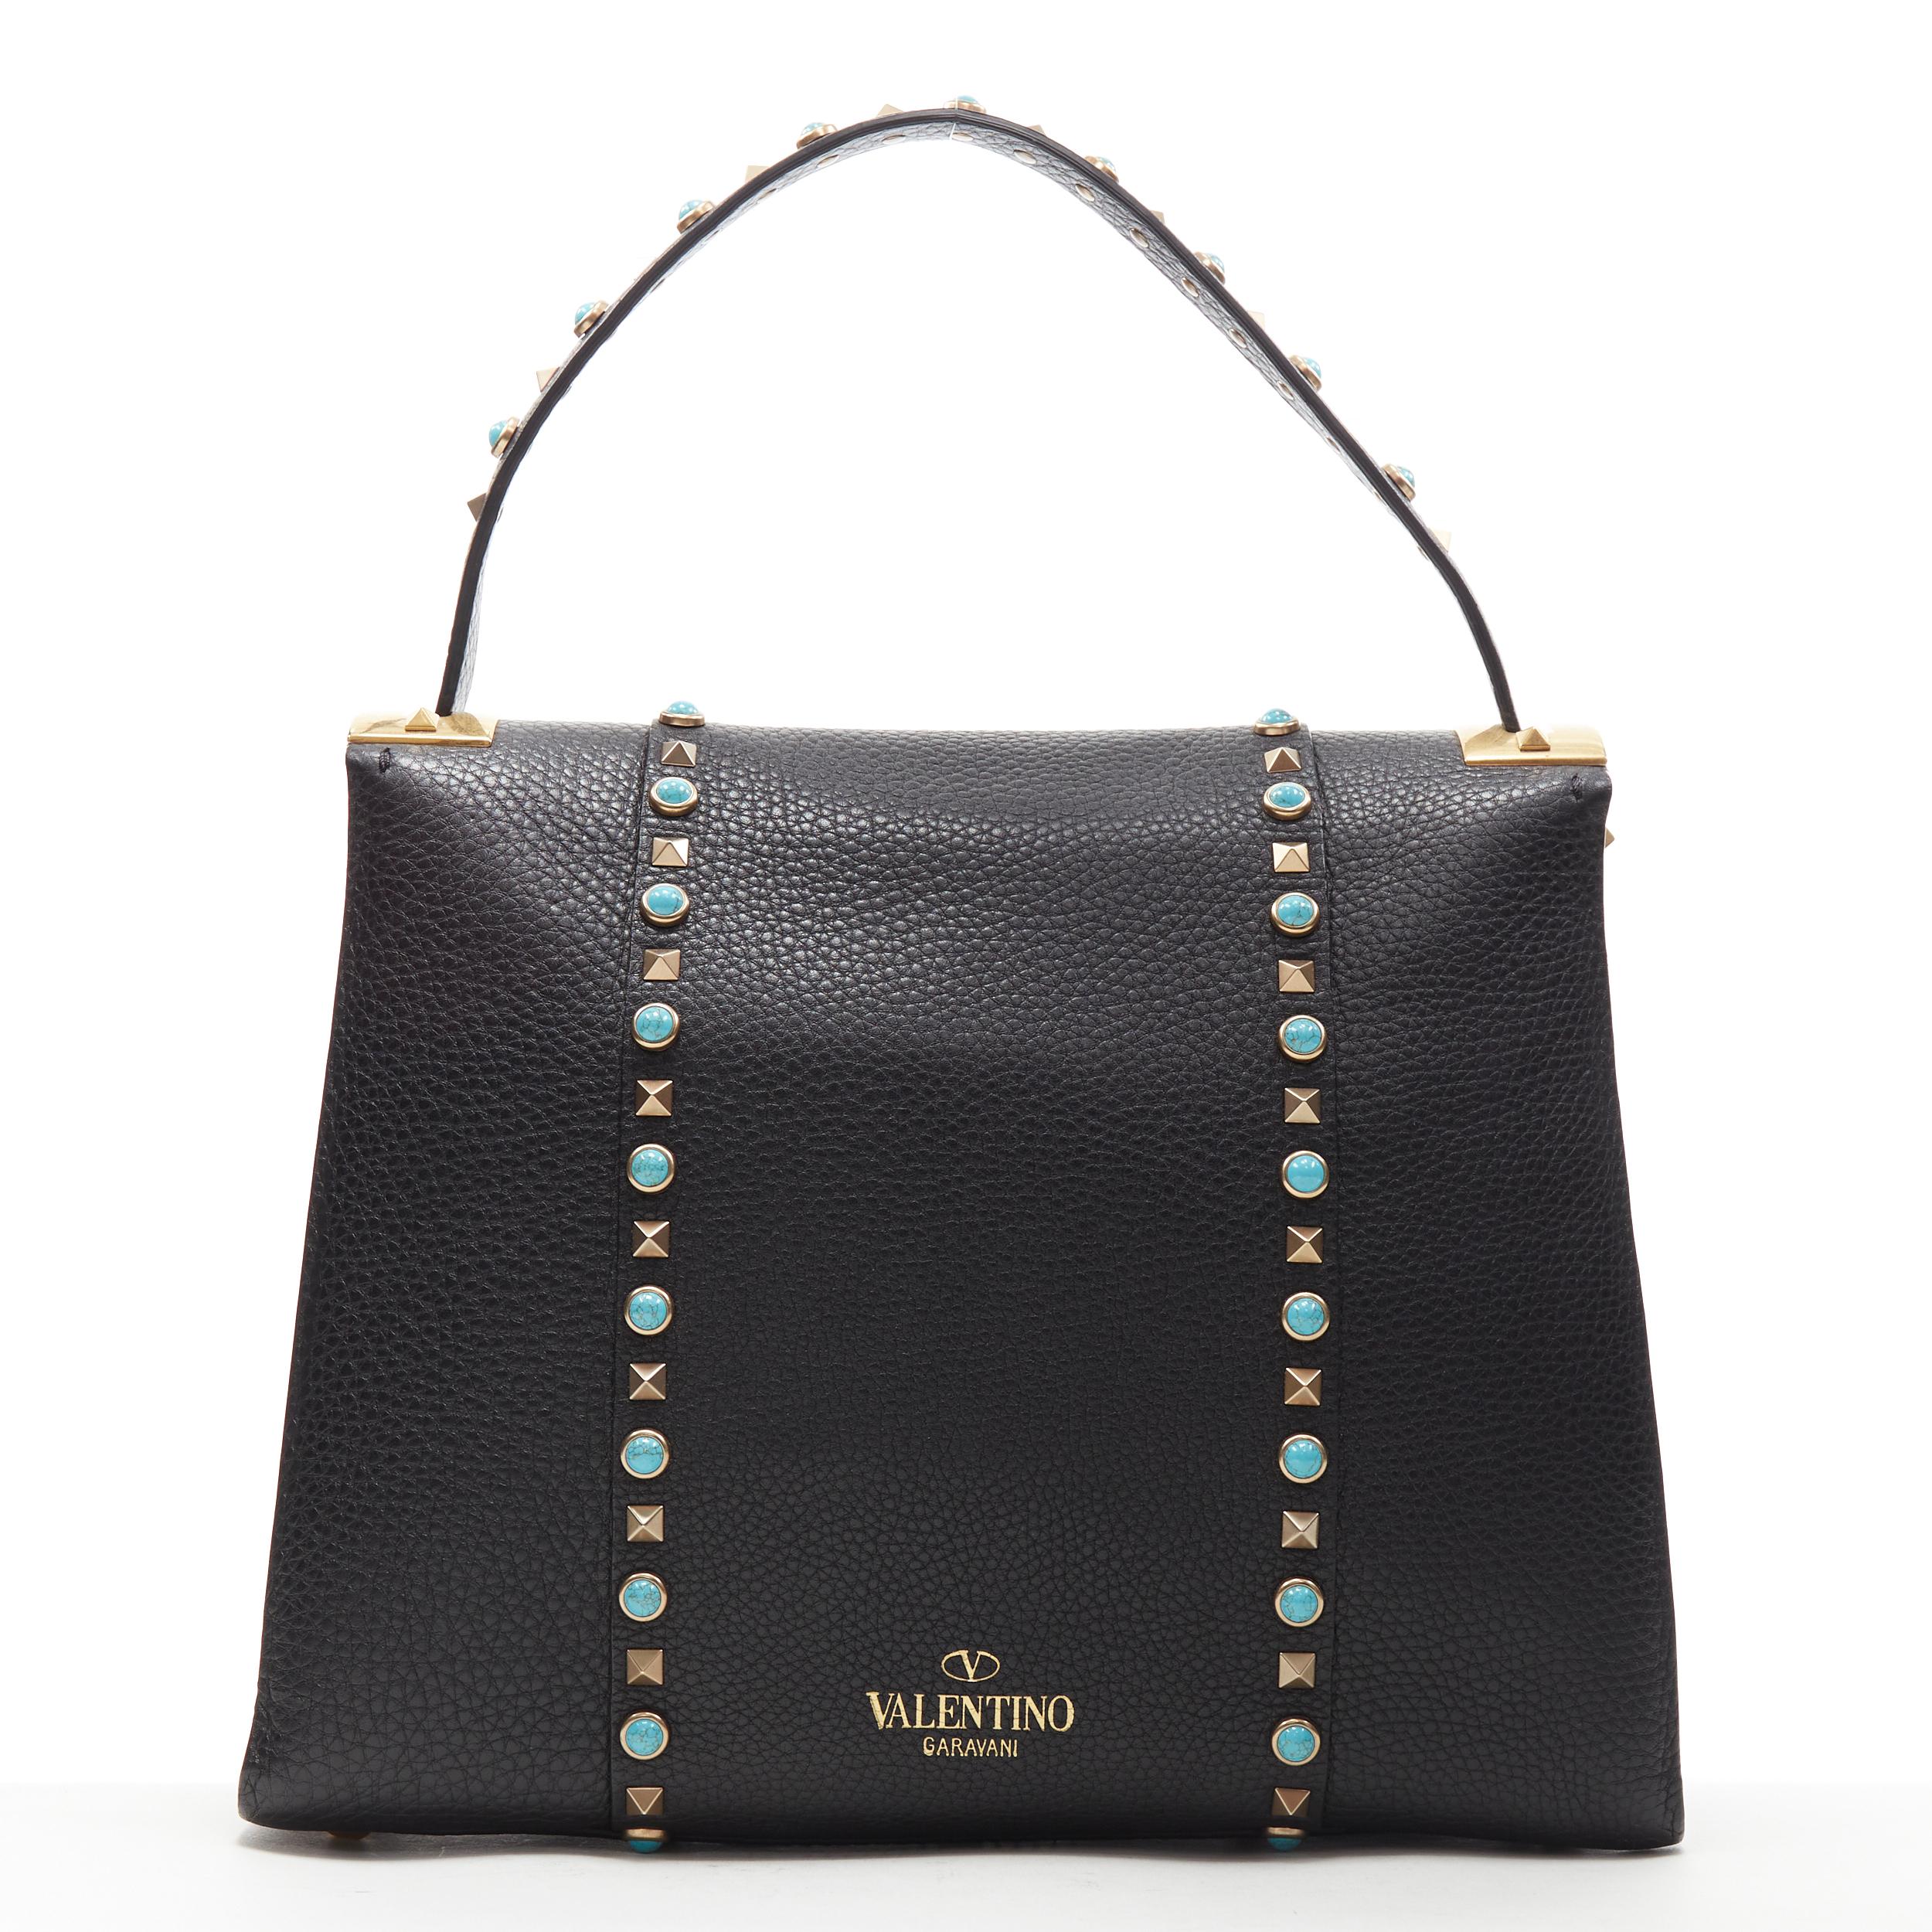 Black new VALENTINO black pebble leather turquoise stone Rockstud satchel shoulder bag